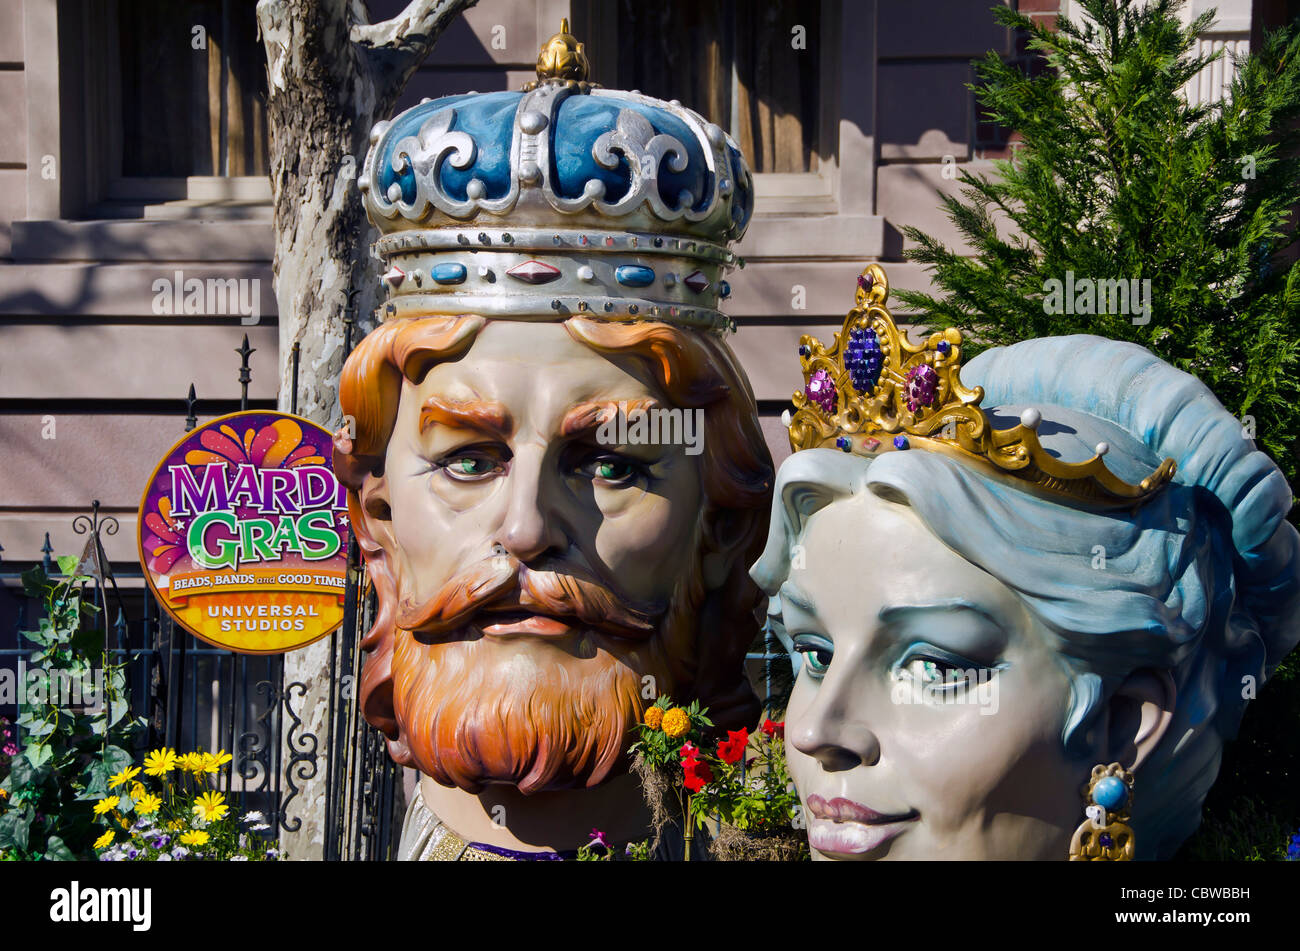 Mardi Gras king and queen statues at Universal Studios Orlando annual Mardi Gras celebration, Florida Stock Photo